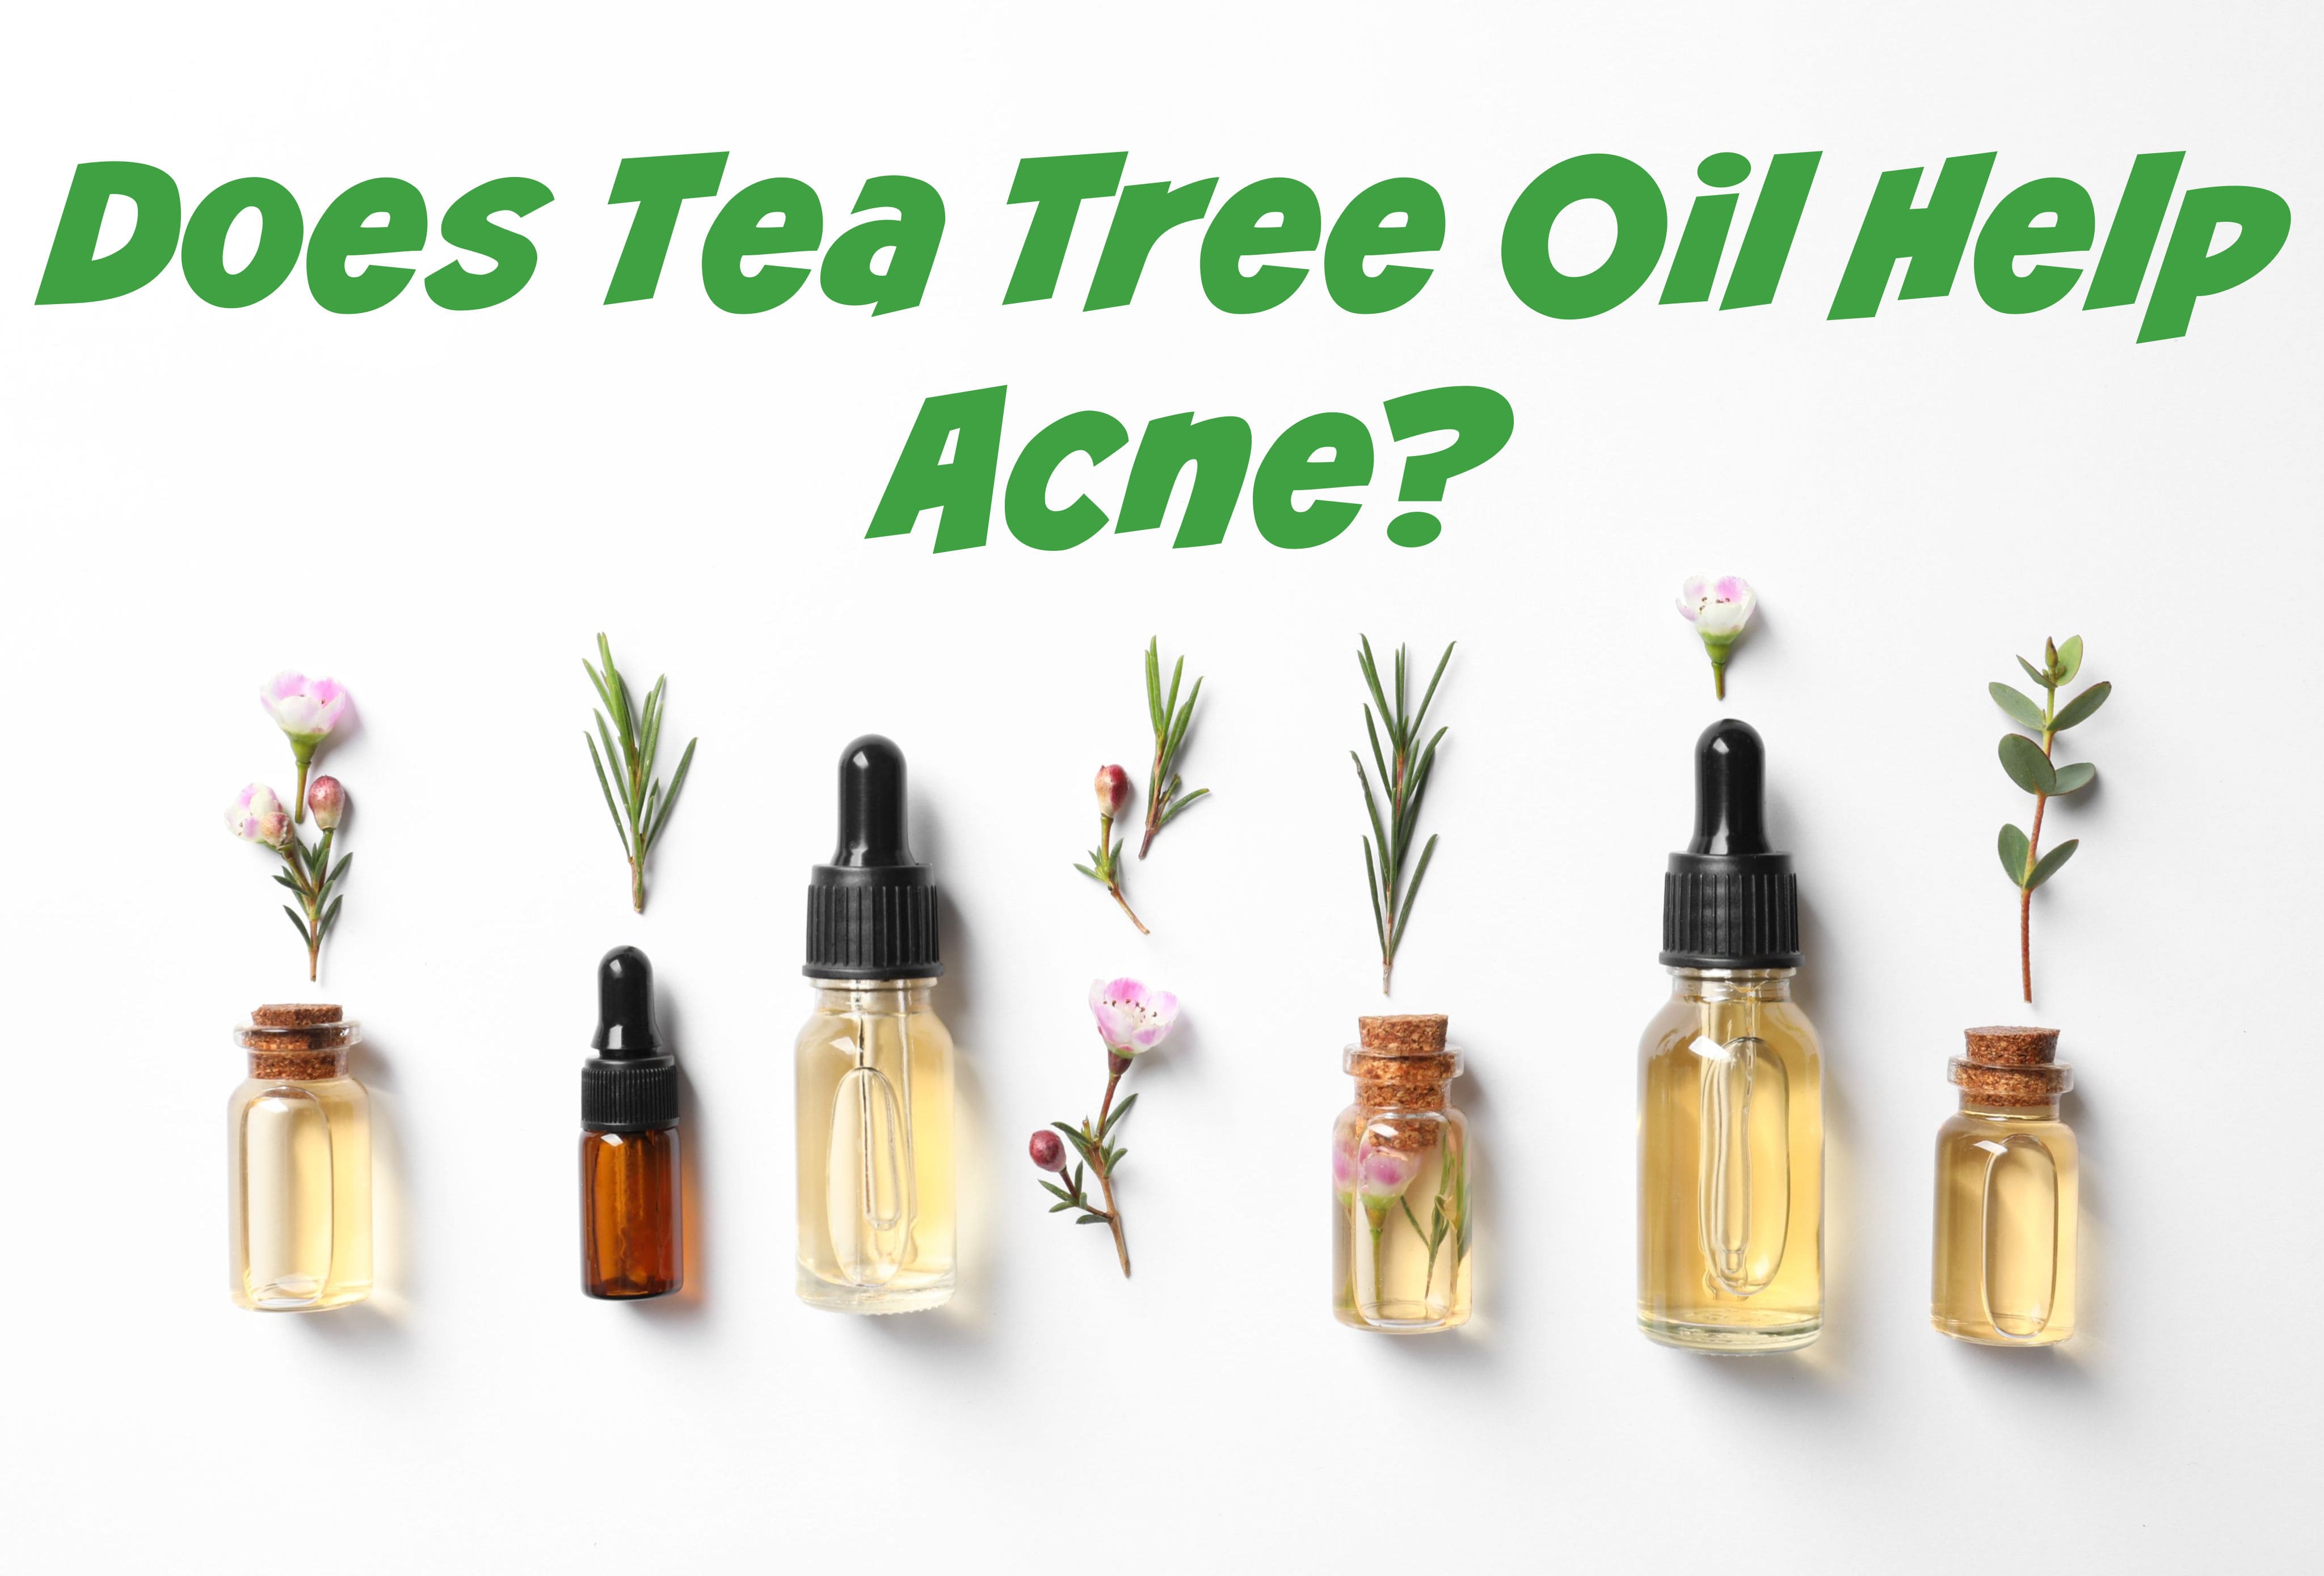 Does Tea Tree Oil Help Acne